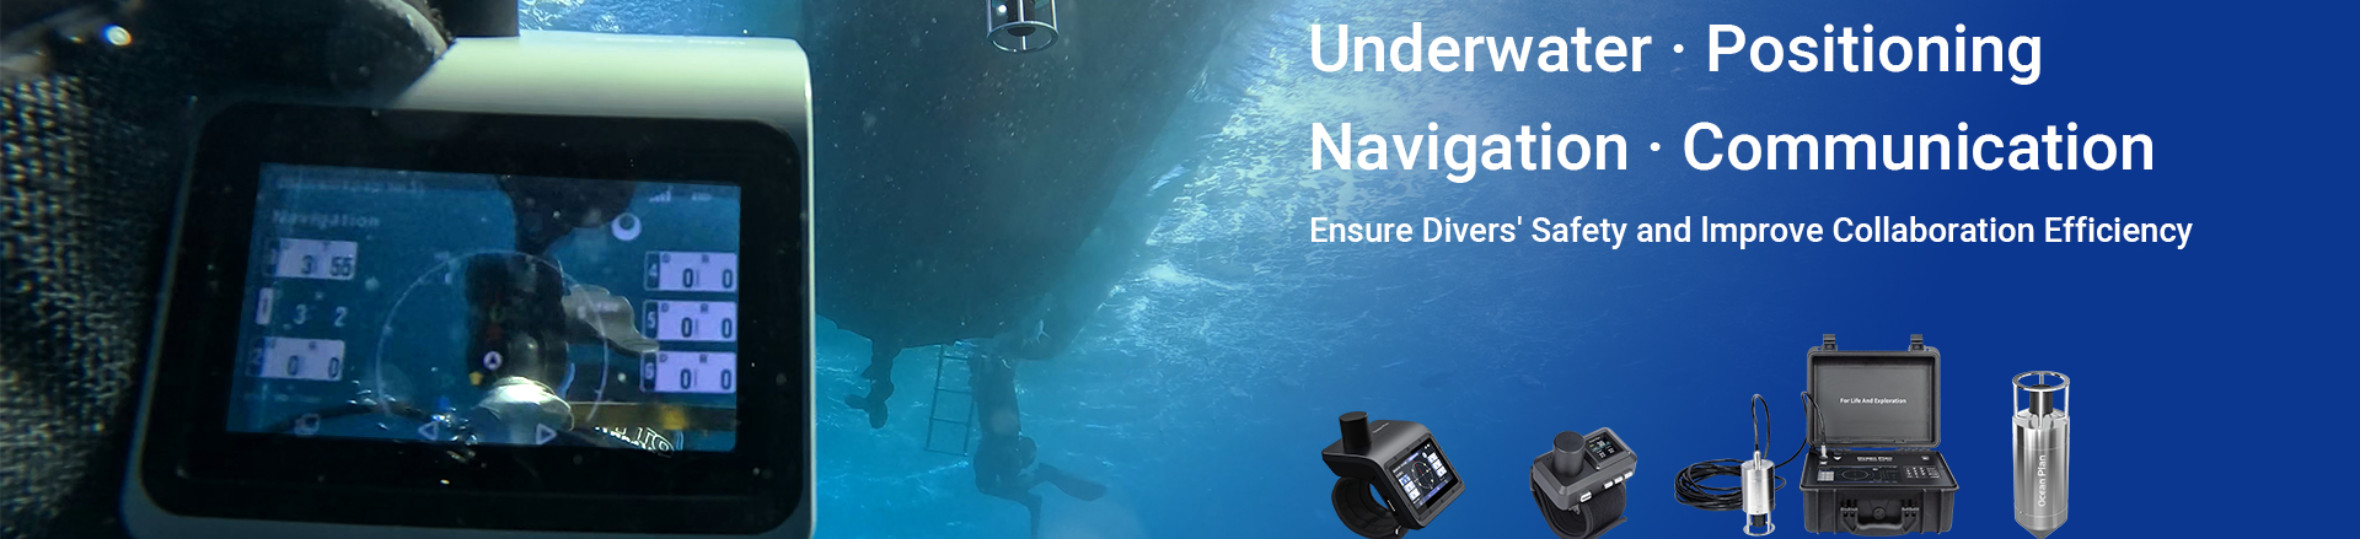 underwater-communication-and-underwater-positioning-navigation-system-ocean-plan.jpg